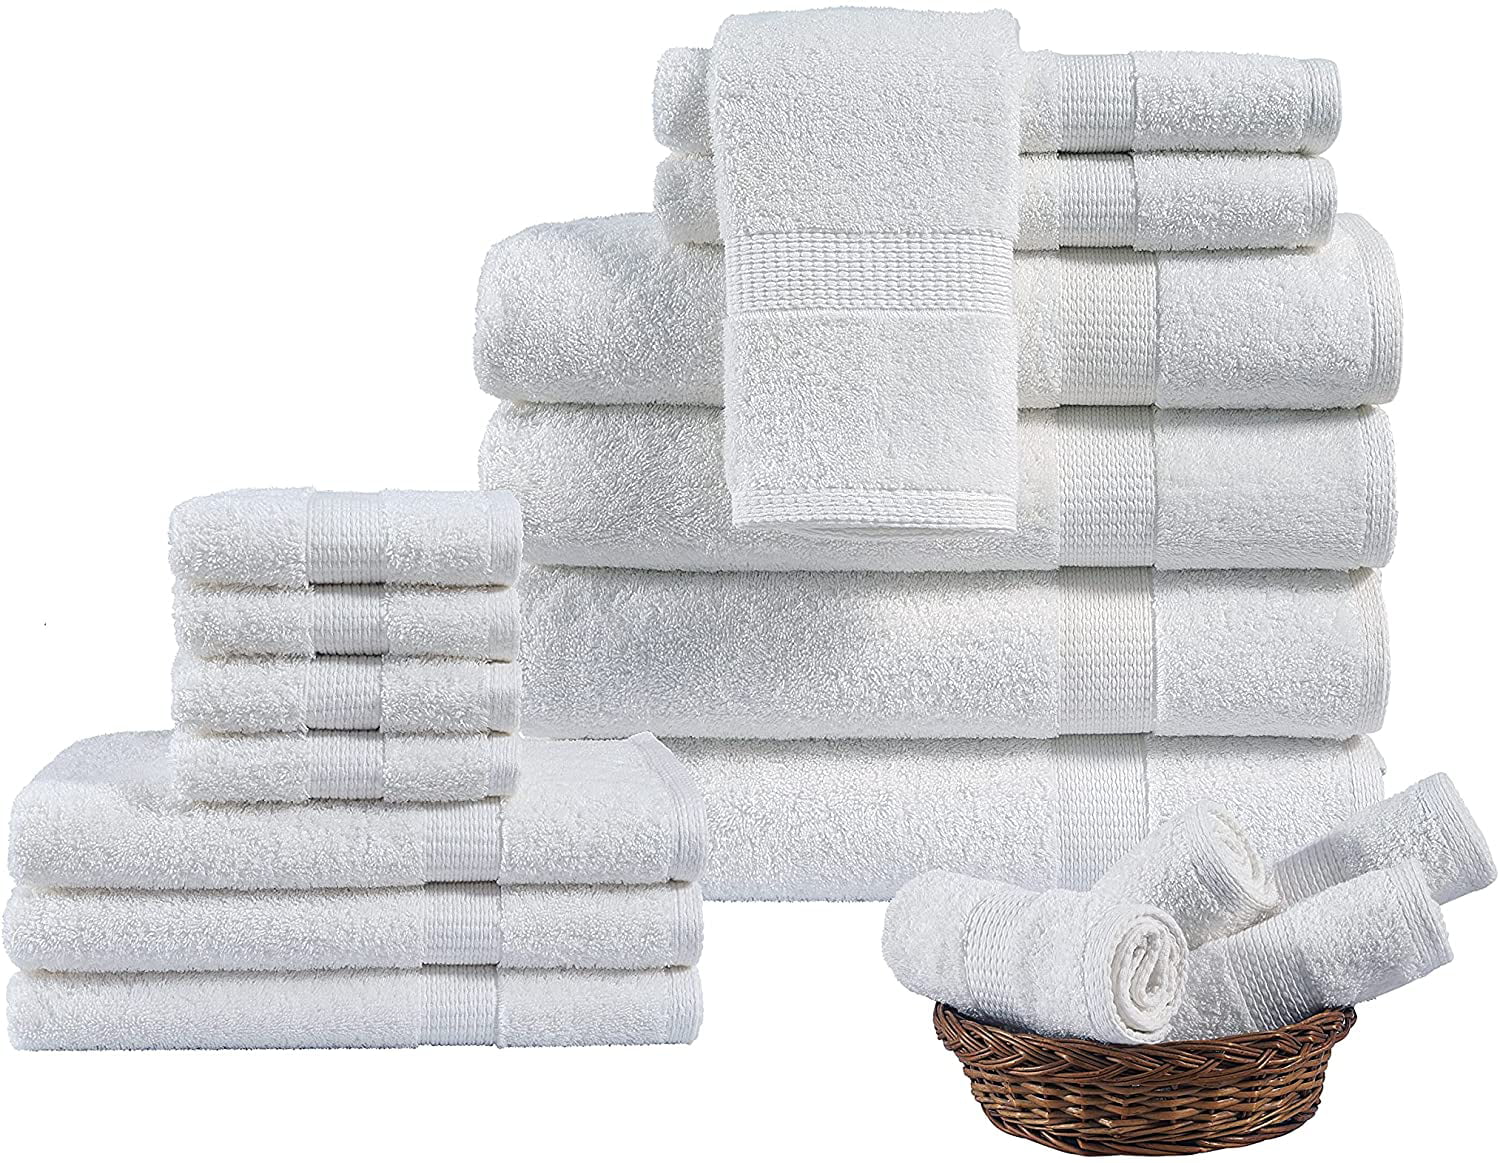 1 Dozen white 100% cotton hotel wash cloths 11x11 washcloth white Towel 12 pcs 